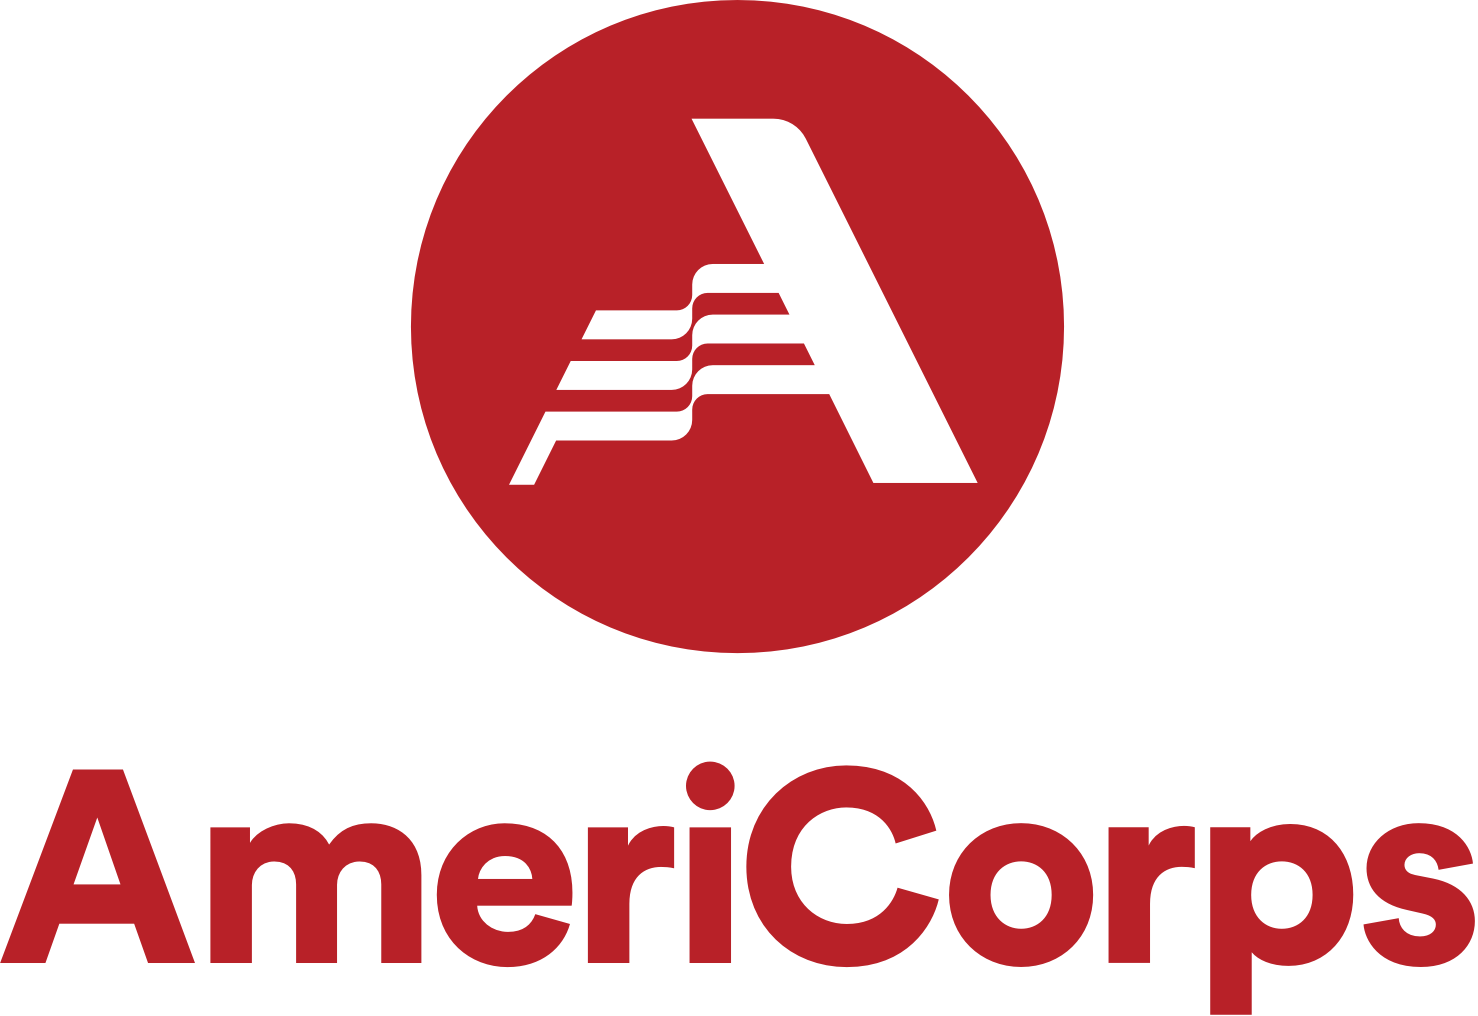 AmeriCorps logo with "Americ